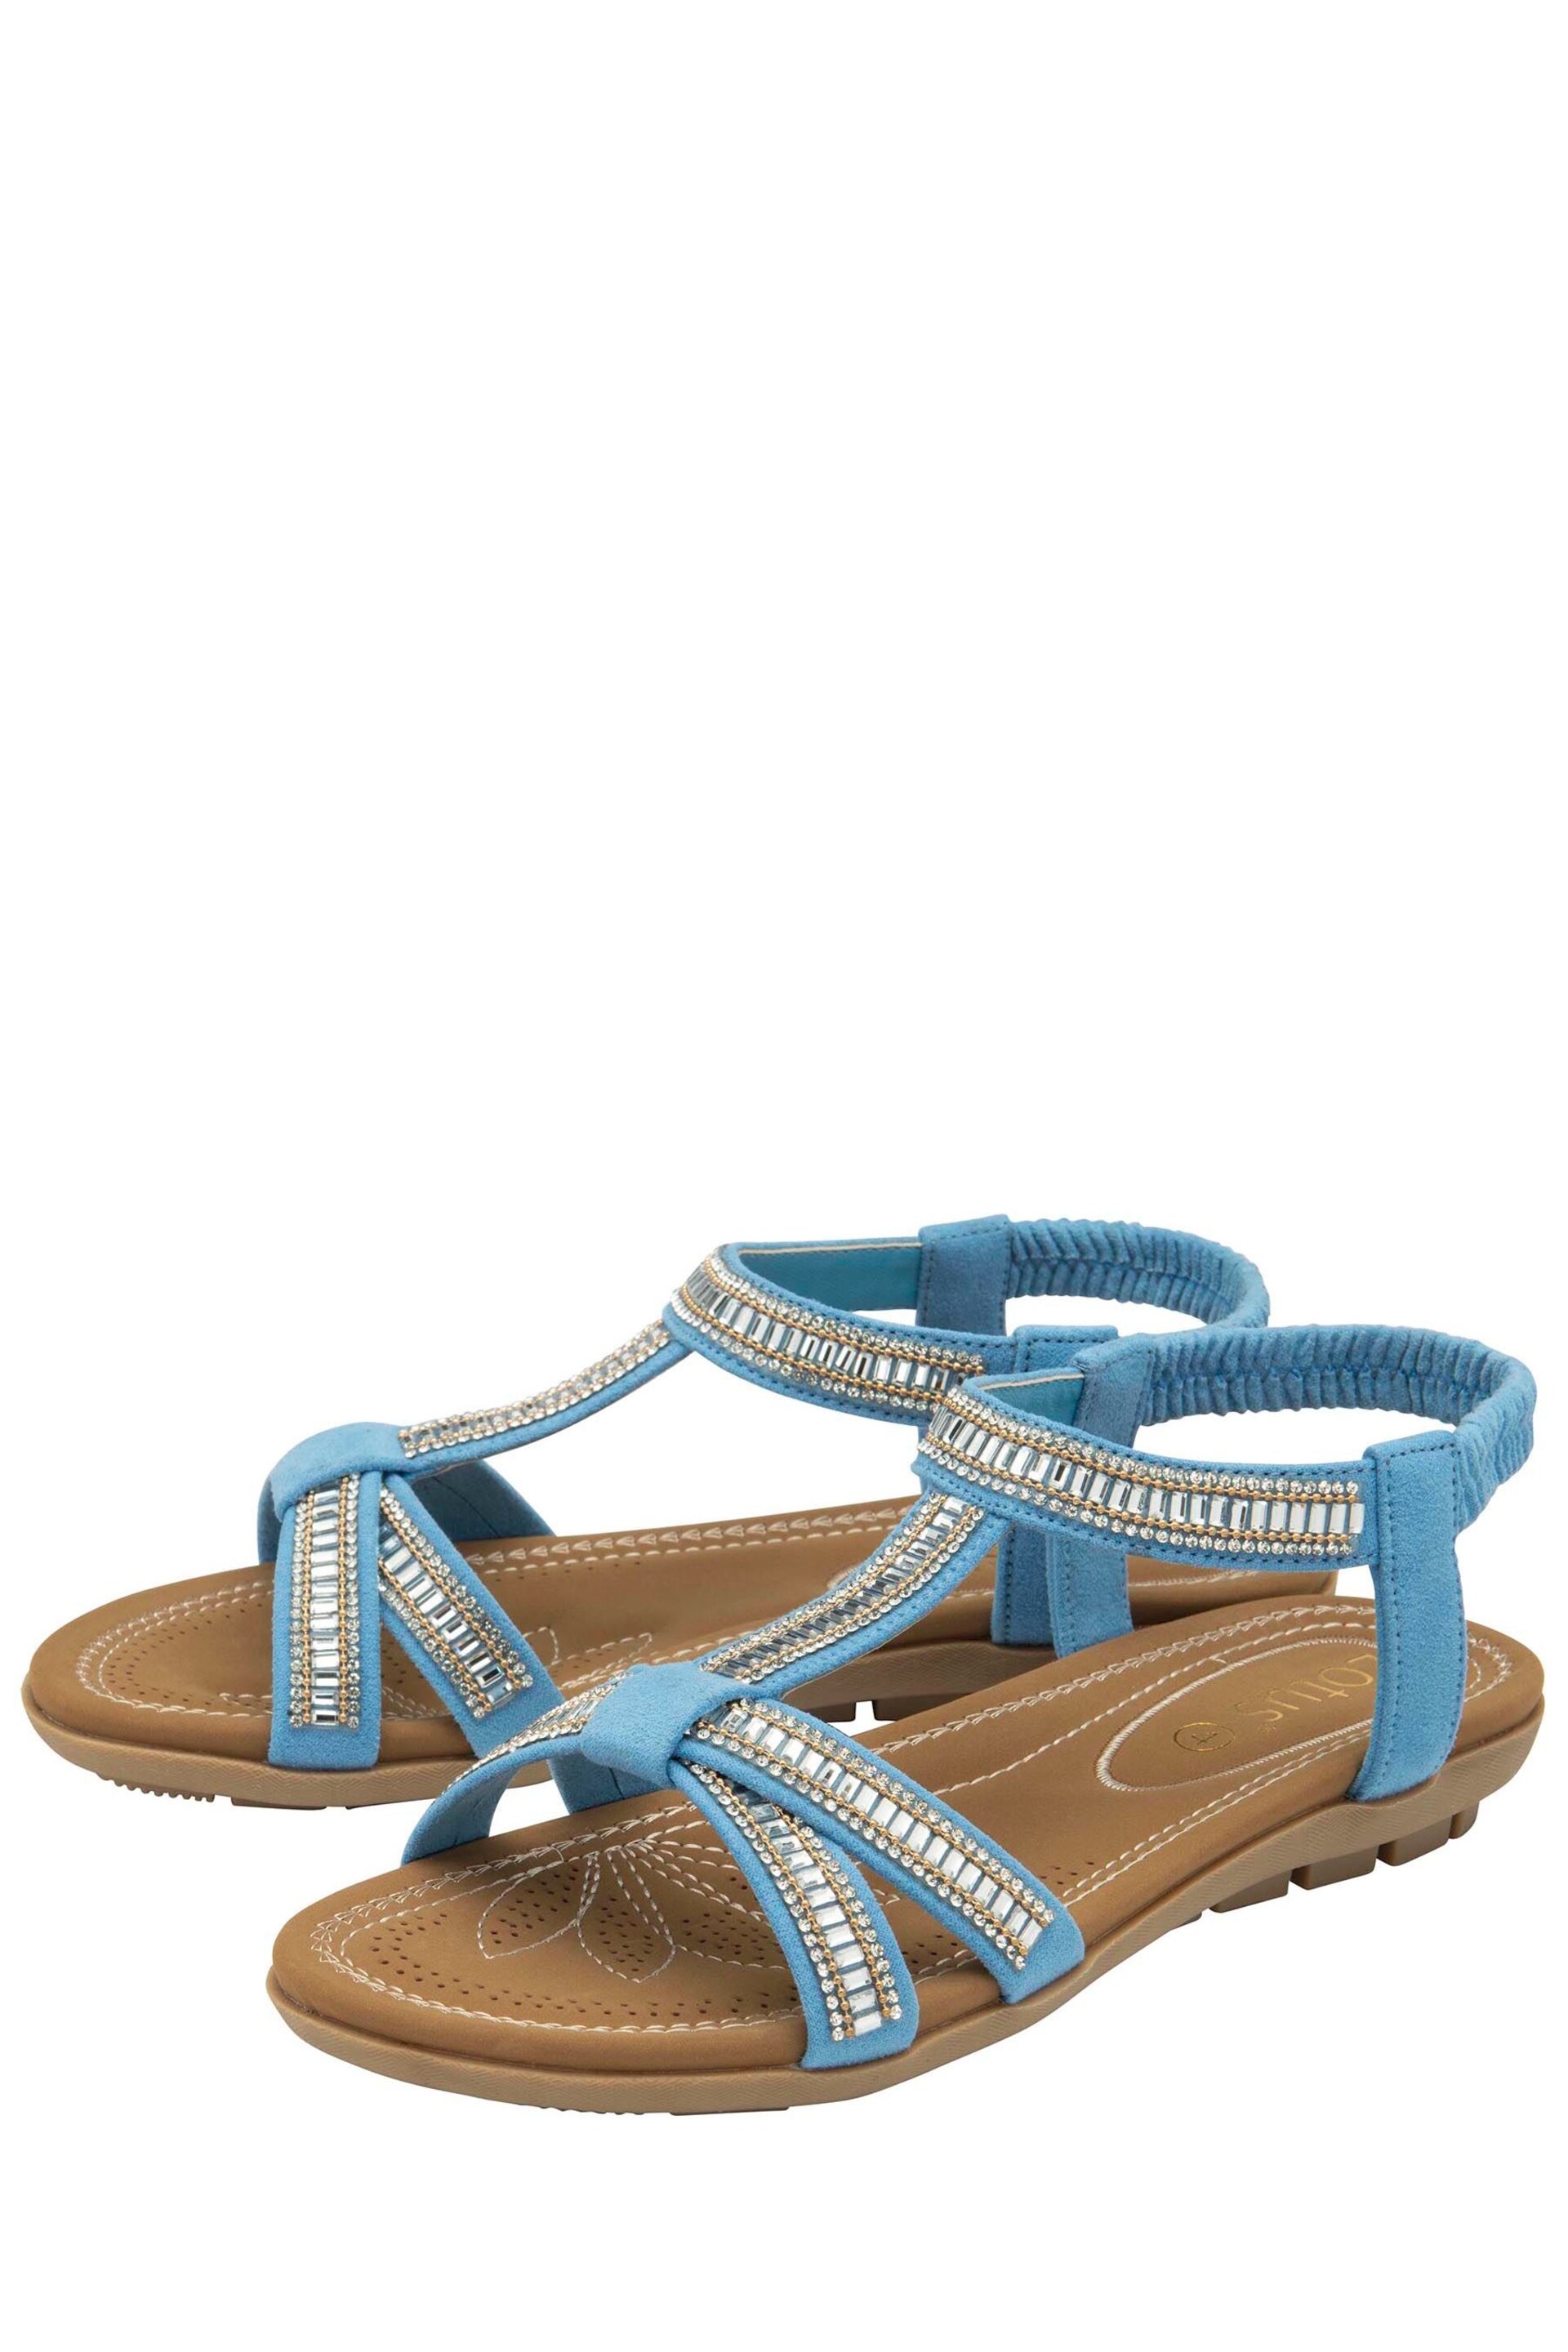 Lotus Blue Open-Toe Flat Sandals - Image 2 of 4